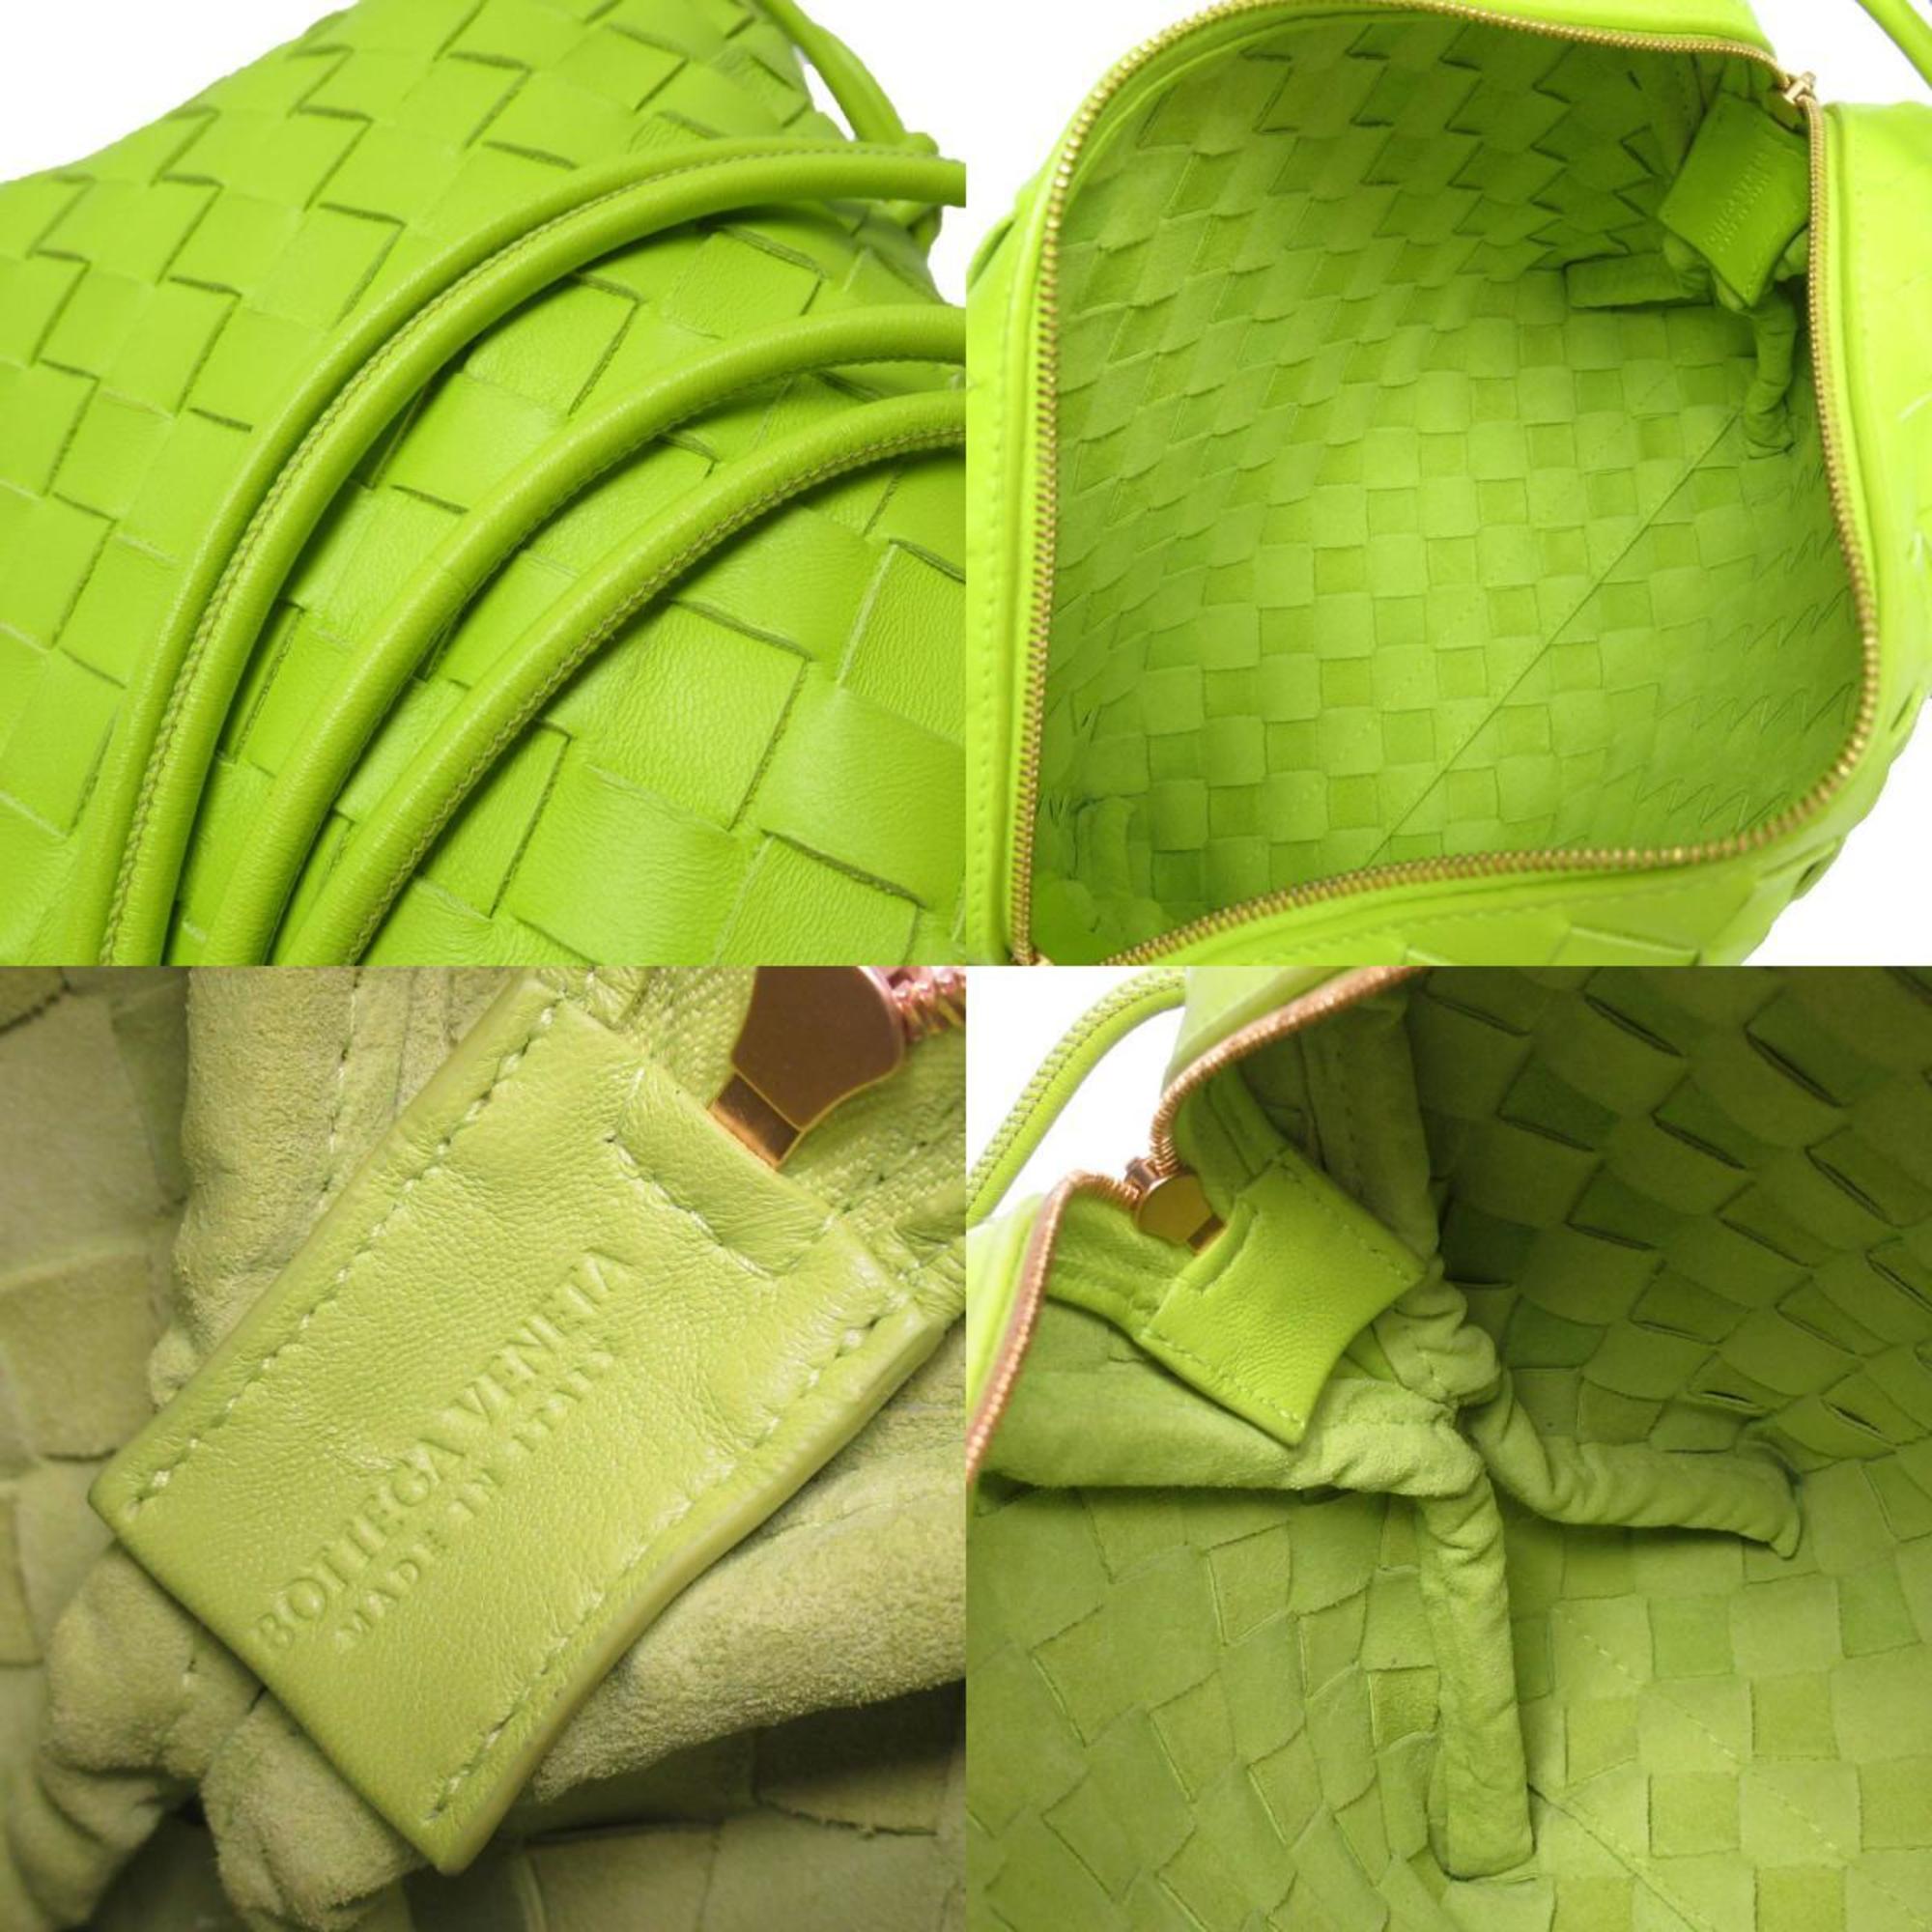 Bottega Veneta Shoulder Bag Small Loop Camera Leather Yellow Green Women's w0390j